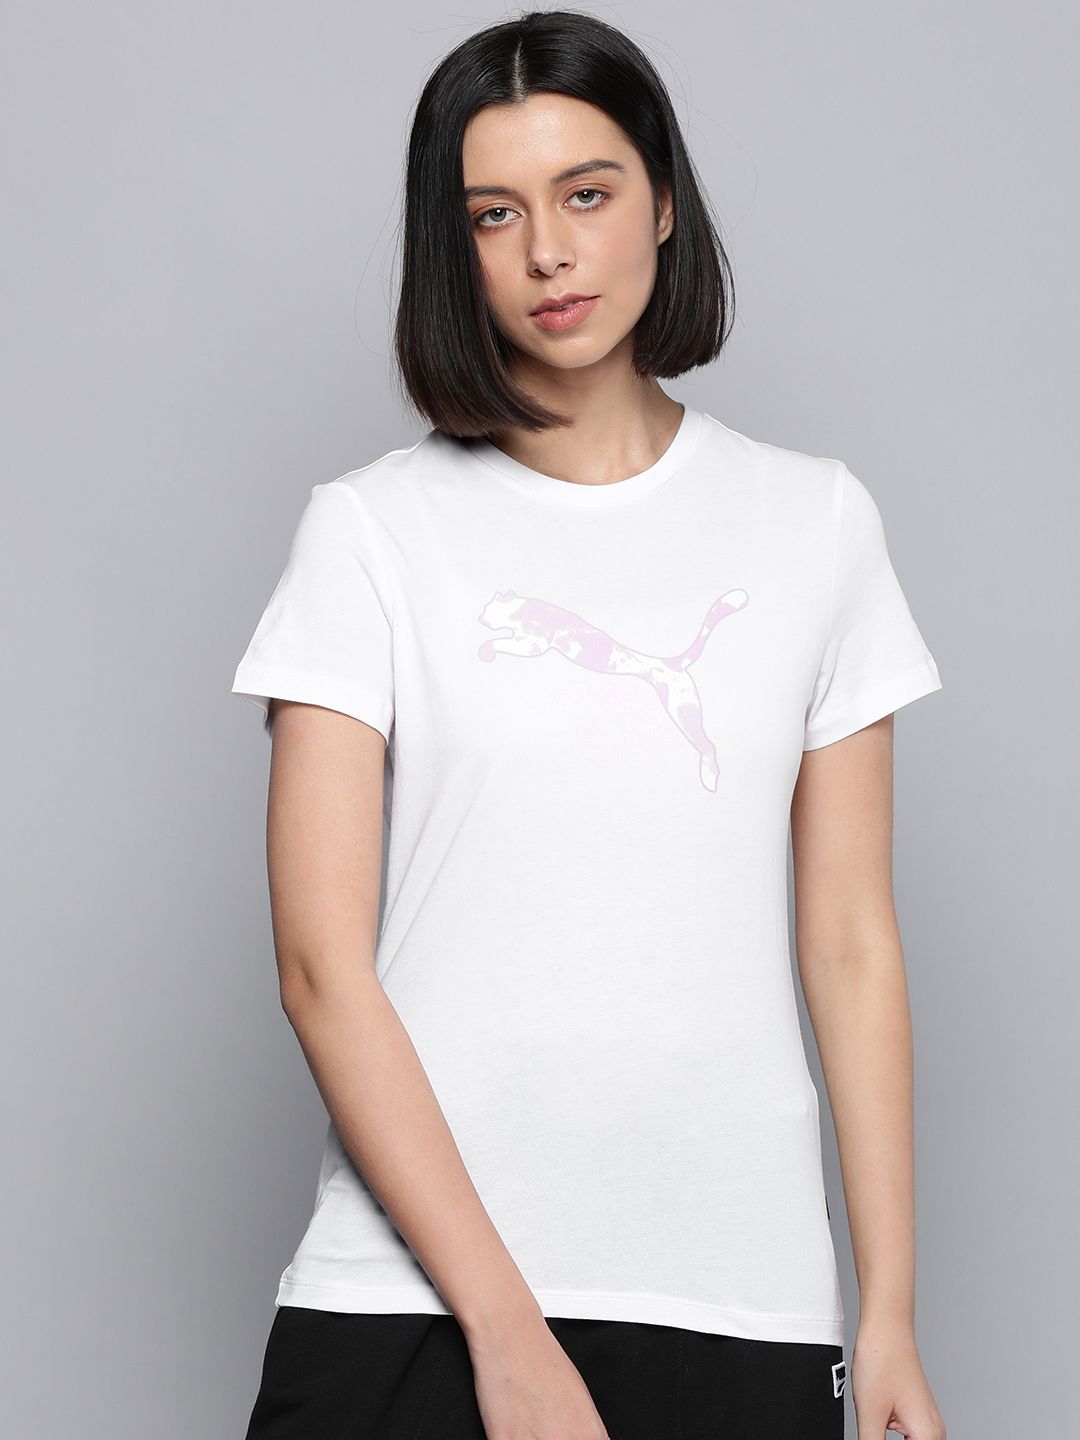 Puma Women White & Purple Summer Graphic Printed T-shirt Price in India